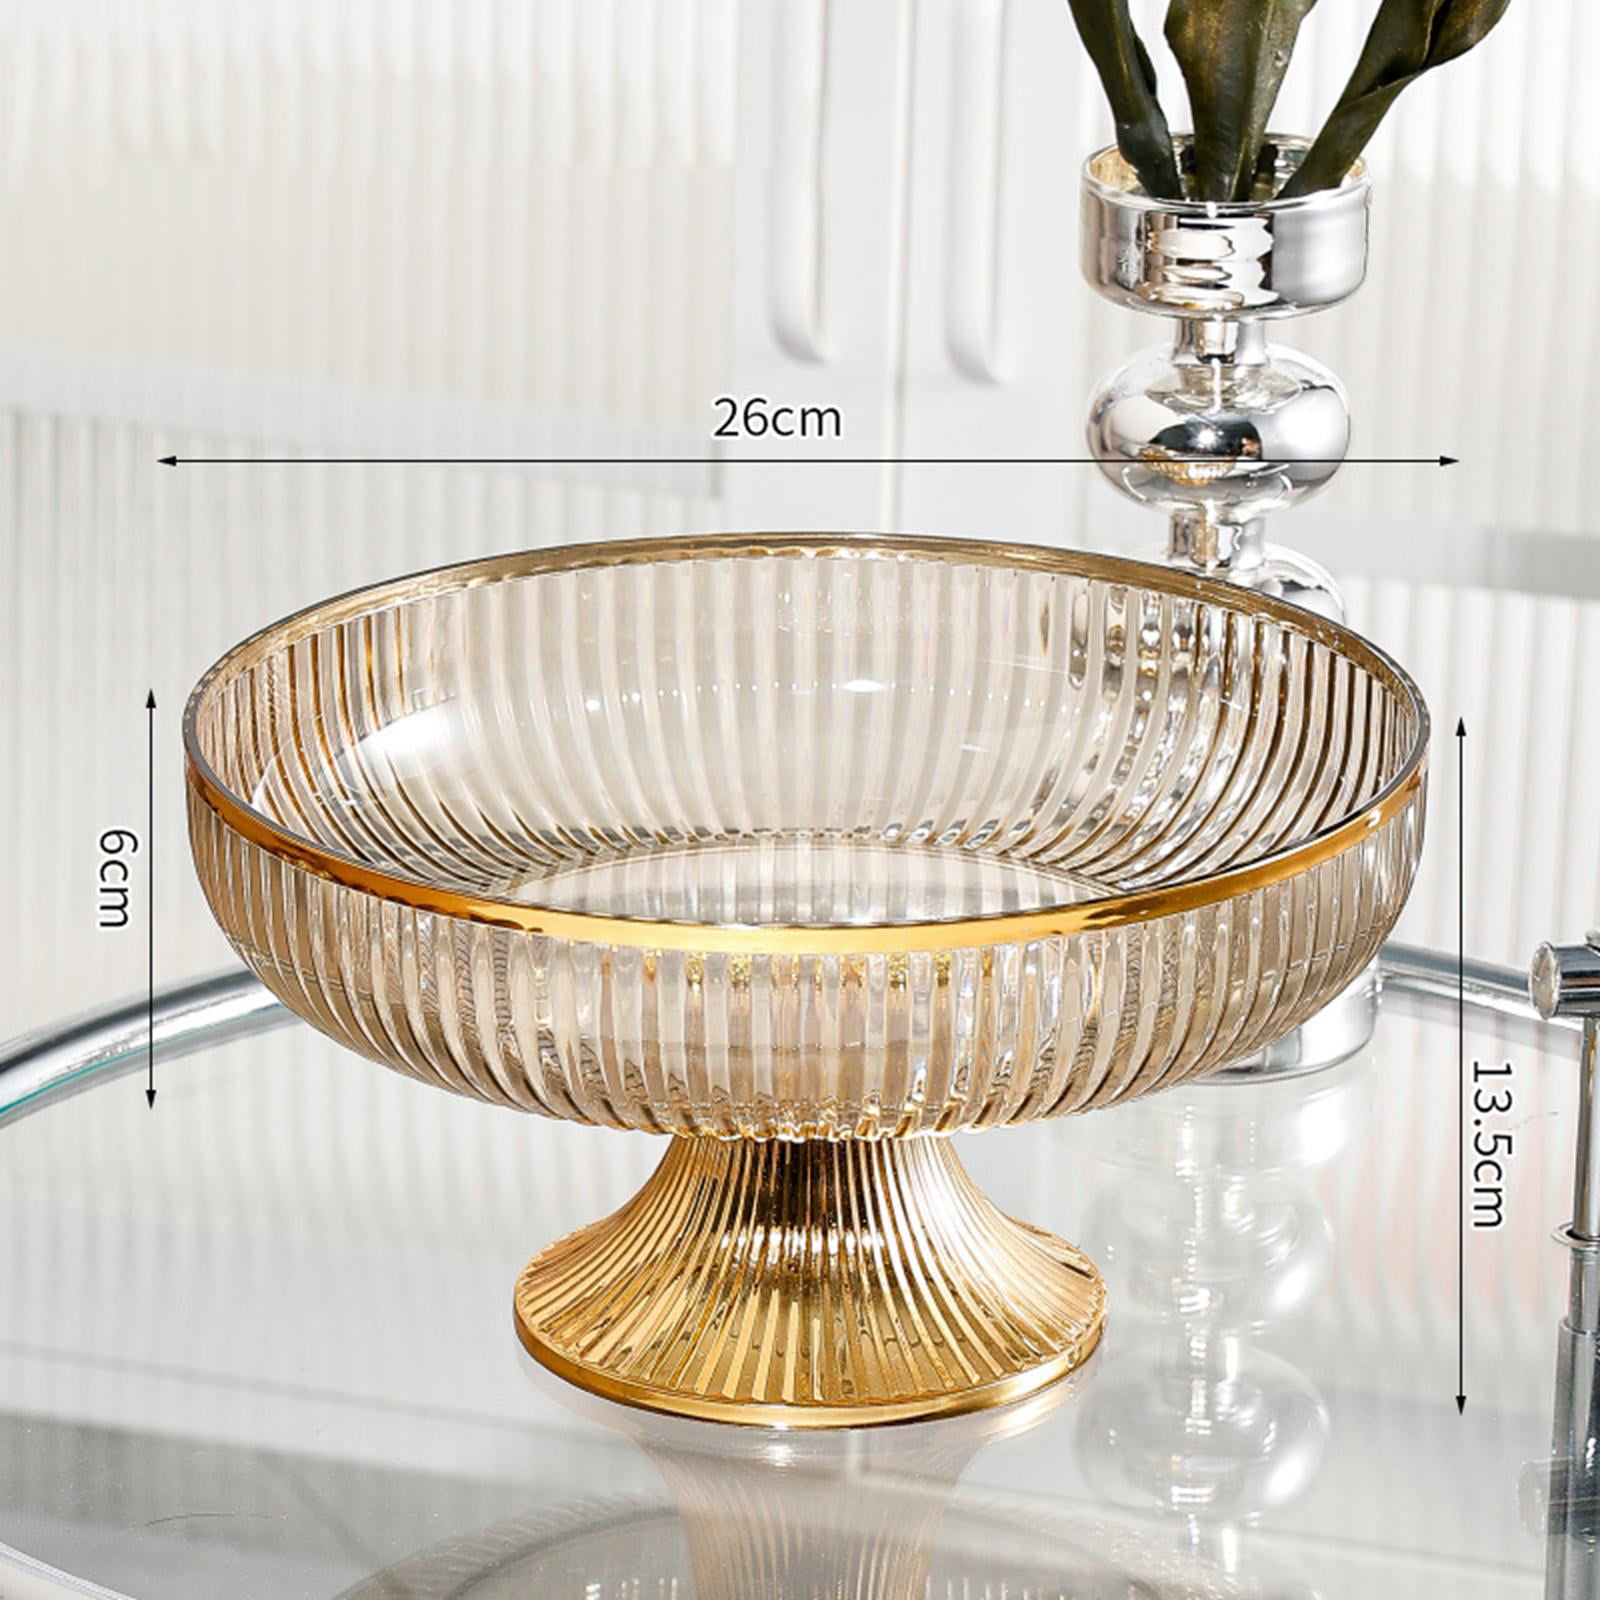 Pedestal Fruit Bowl Plastic Footed Gold/Cognac Decorative Best 12 Inch